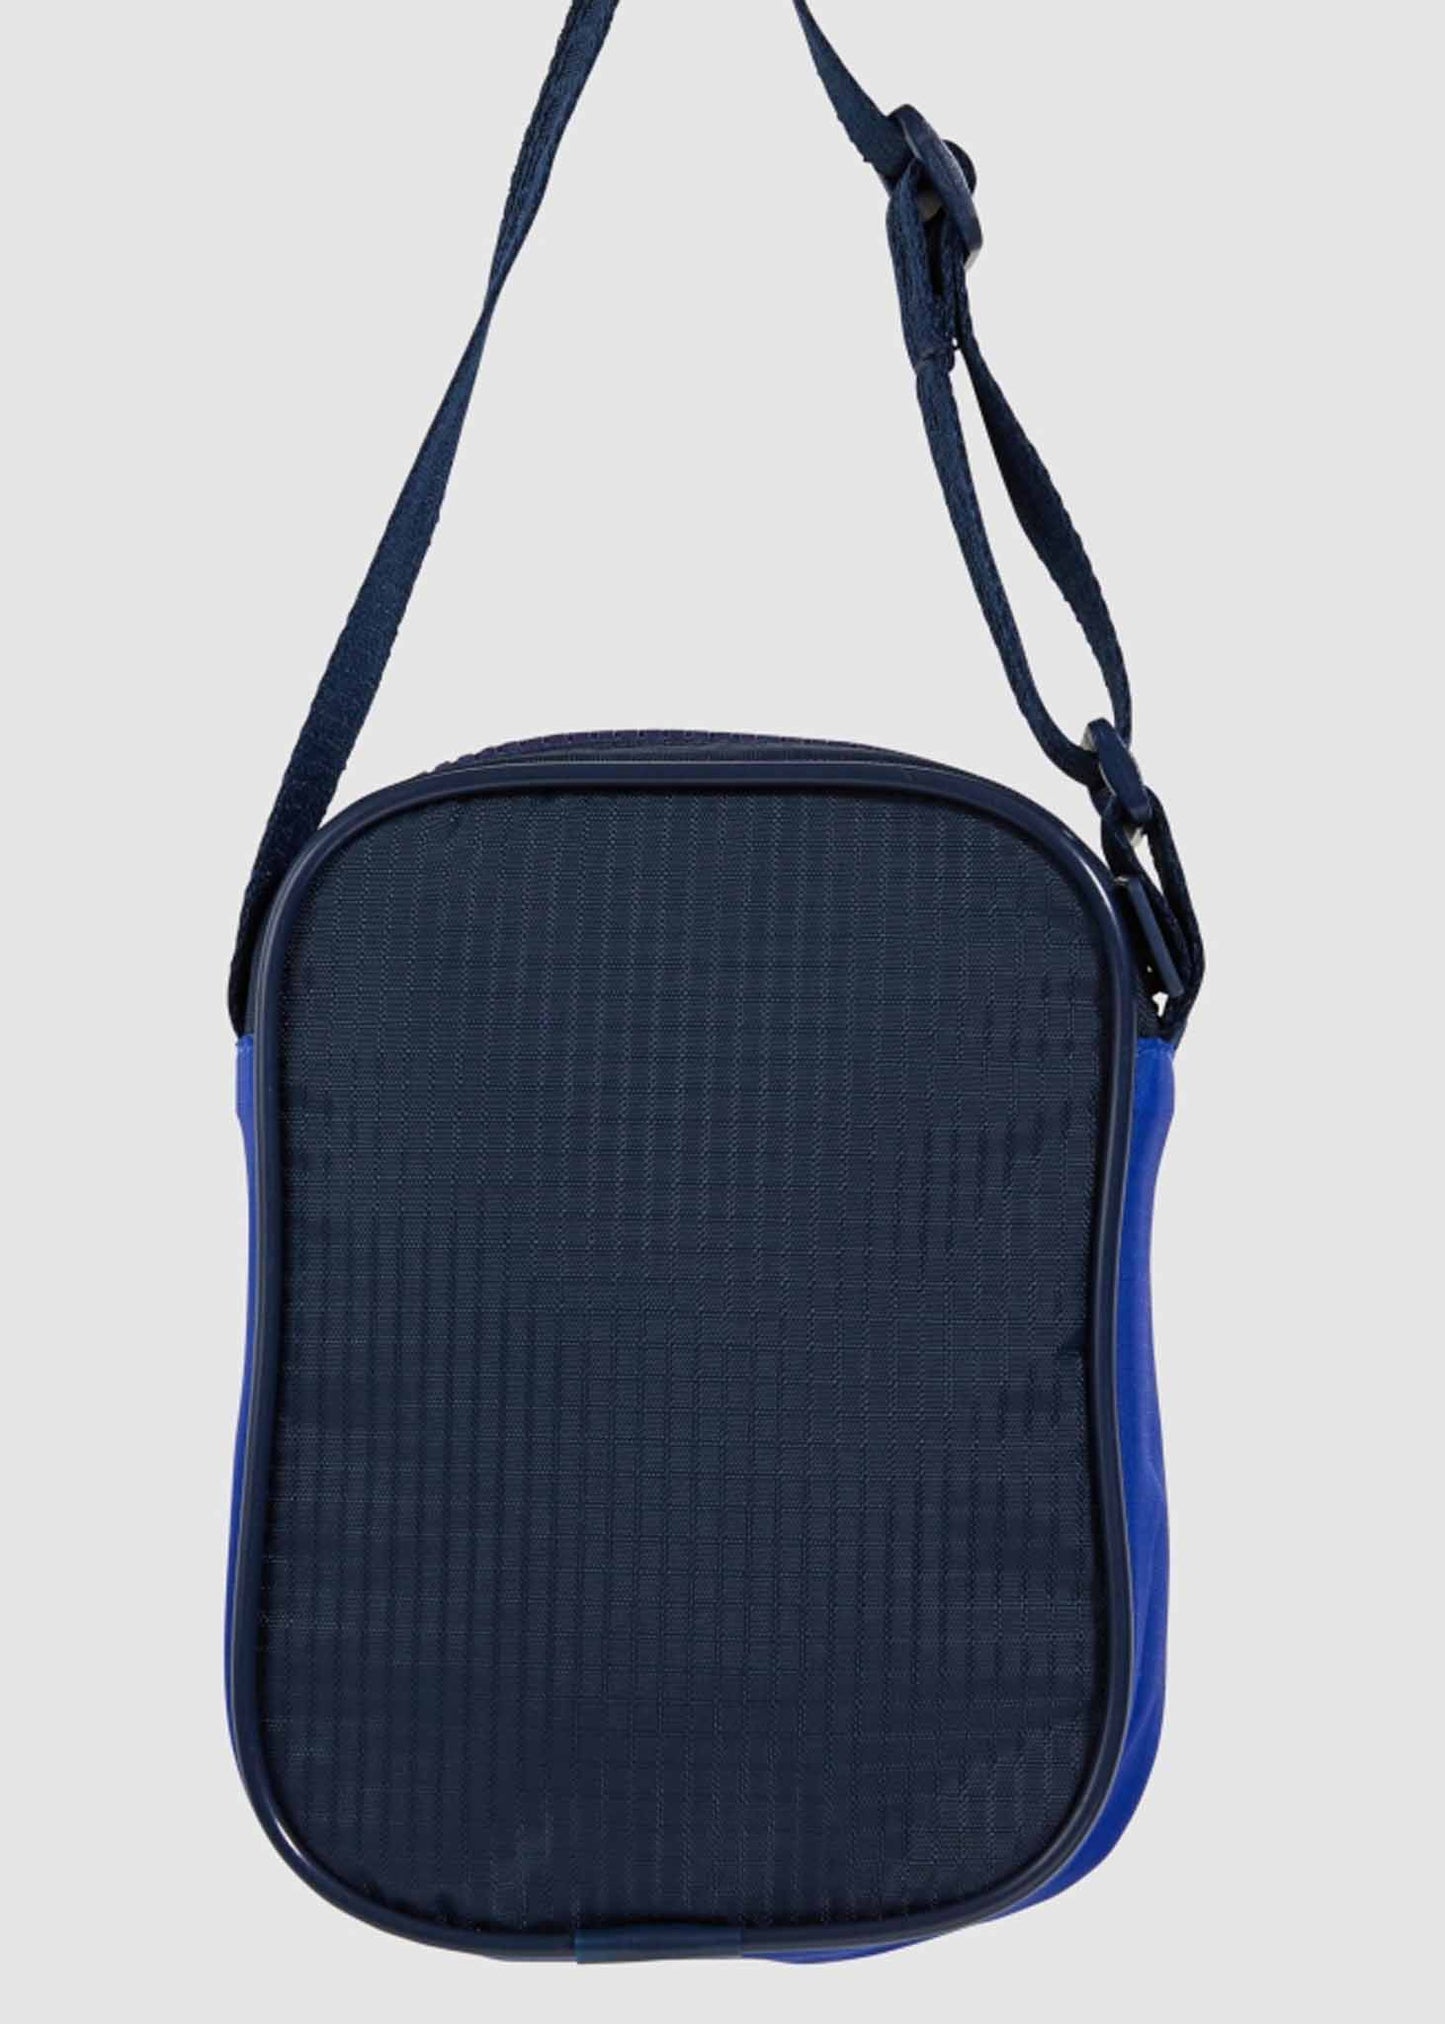 Lekki small item bag - blue navy